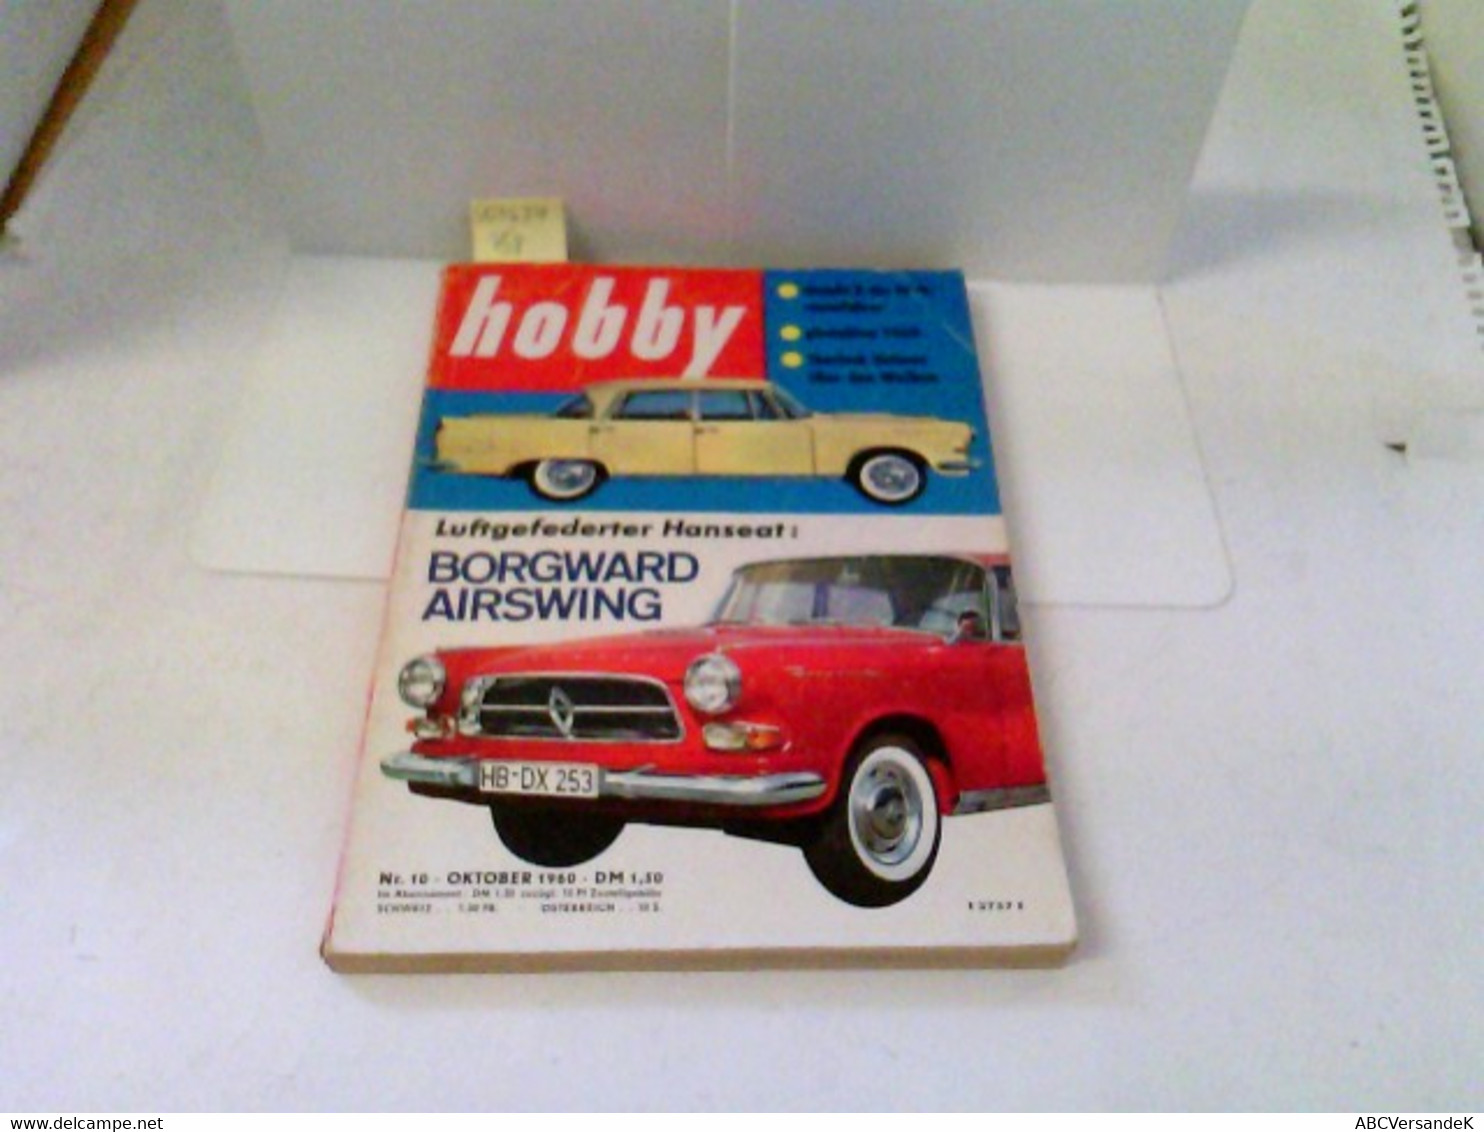 Hobby - Das Magazin Der Technik - Heft 1960/10 - Luftgefederter Hanseat: Borgward Airswing U.v.m. - Technical